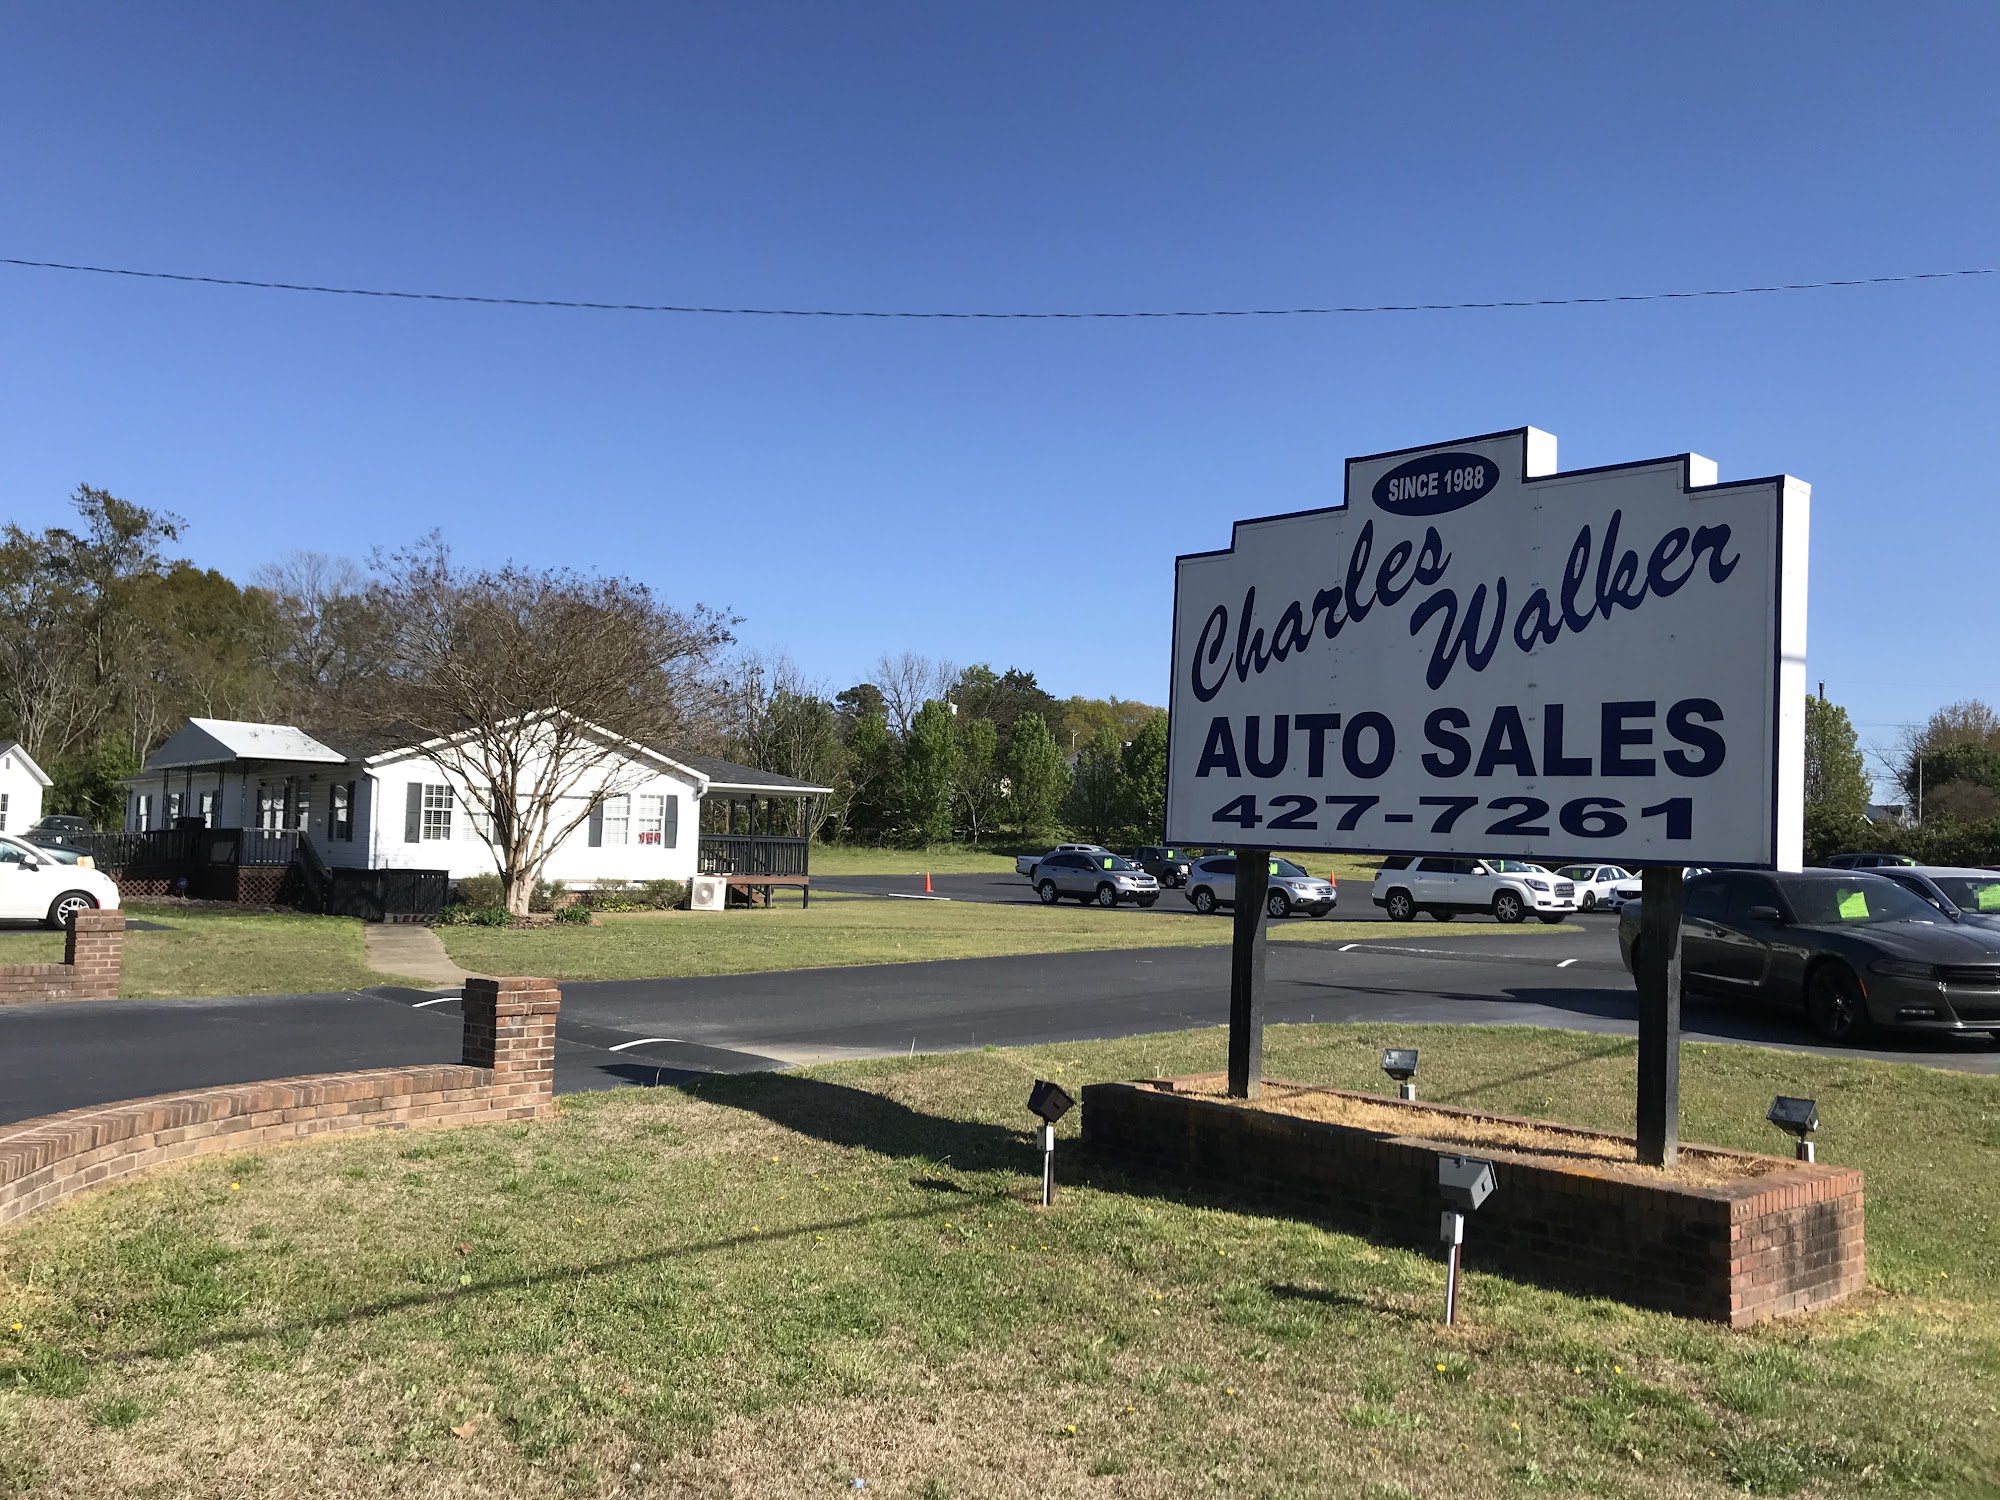 Charles Walker Auto Sales LLC